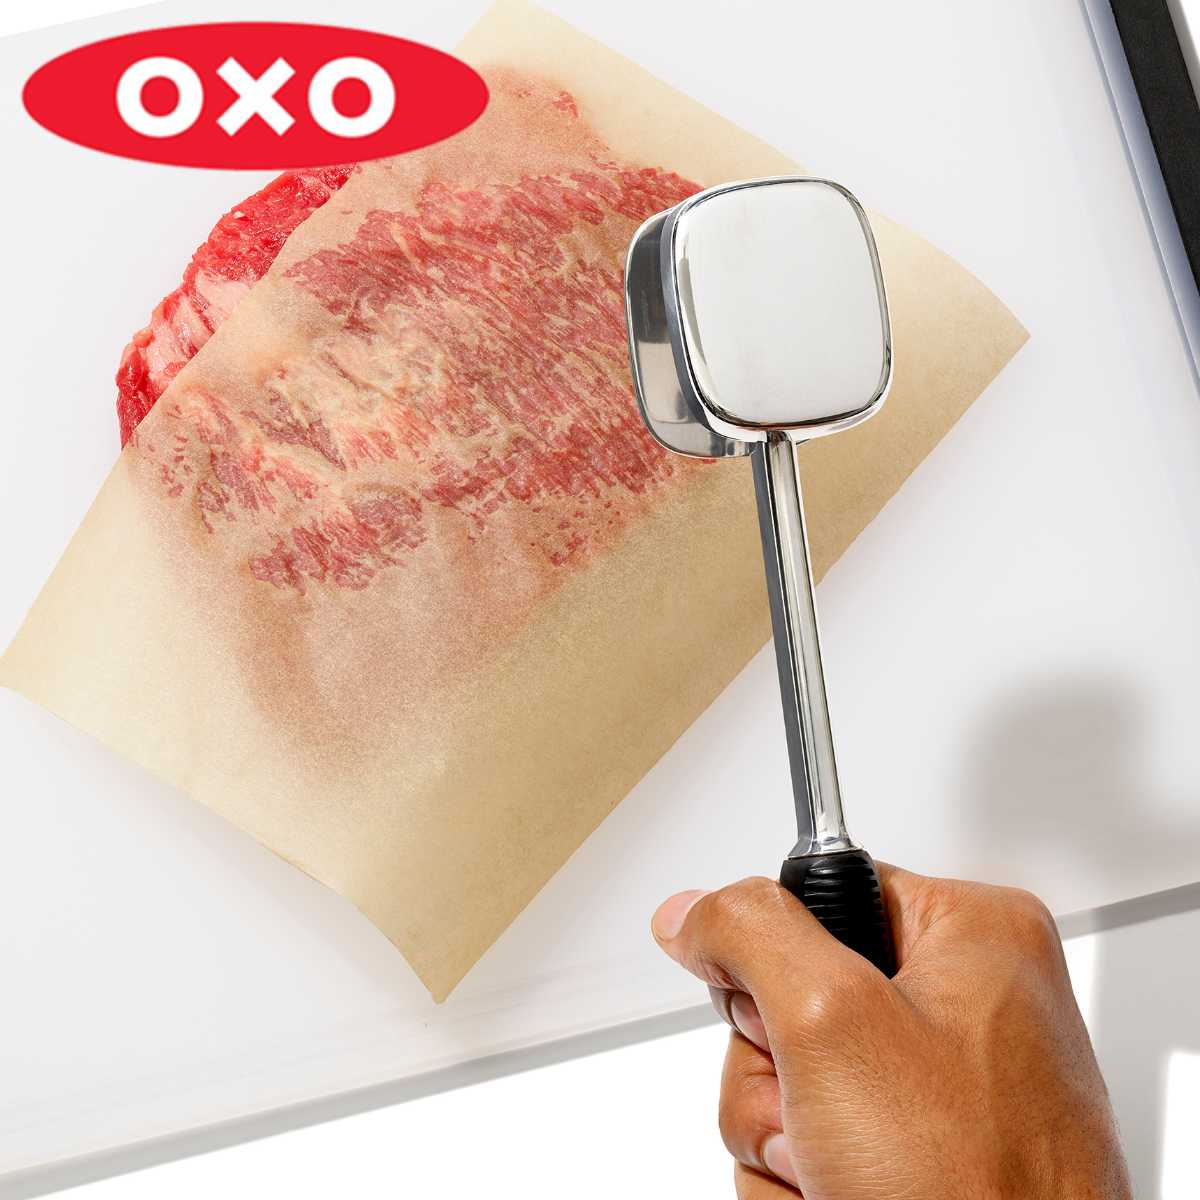 OXO ミートテンダライザー オクソー 肉たたき 肉叩き 肉たたきハンマー ミートハンマー とんかつ ステーキ 肉をたたく 下ごしらえ用品 調理用品 キッチン便利グッズ キッチンツール 